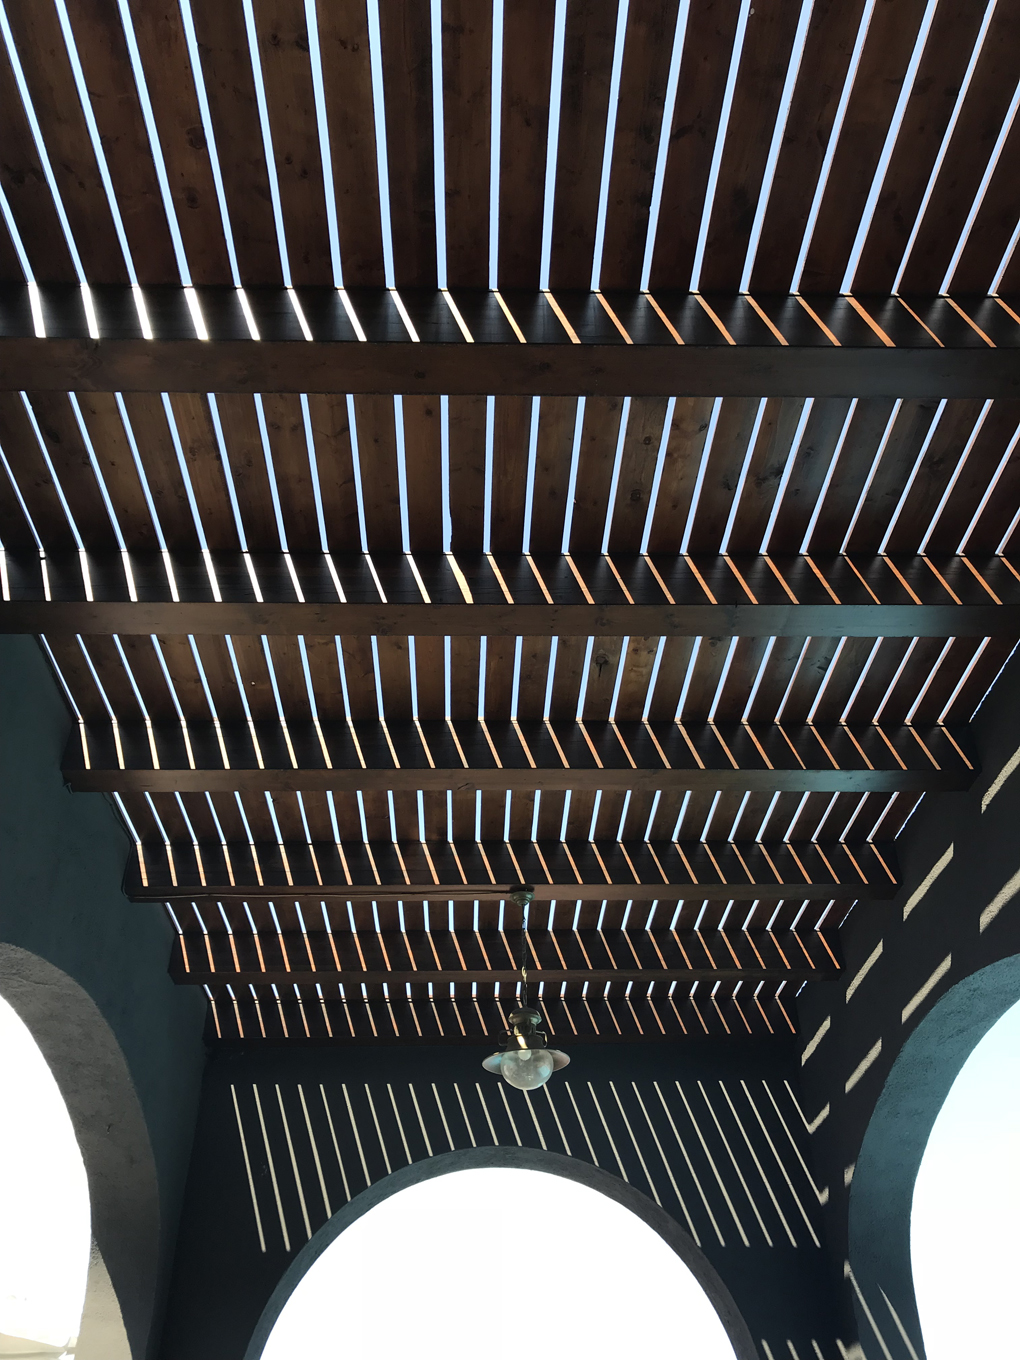 A geometric pattern created as sun shines through wooden slats